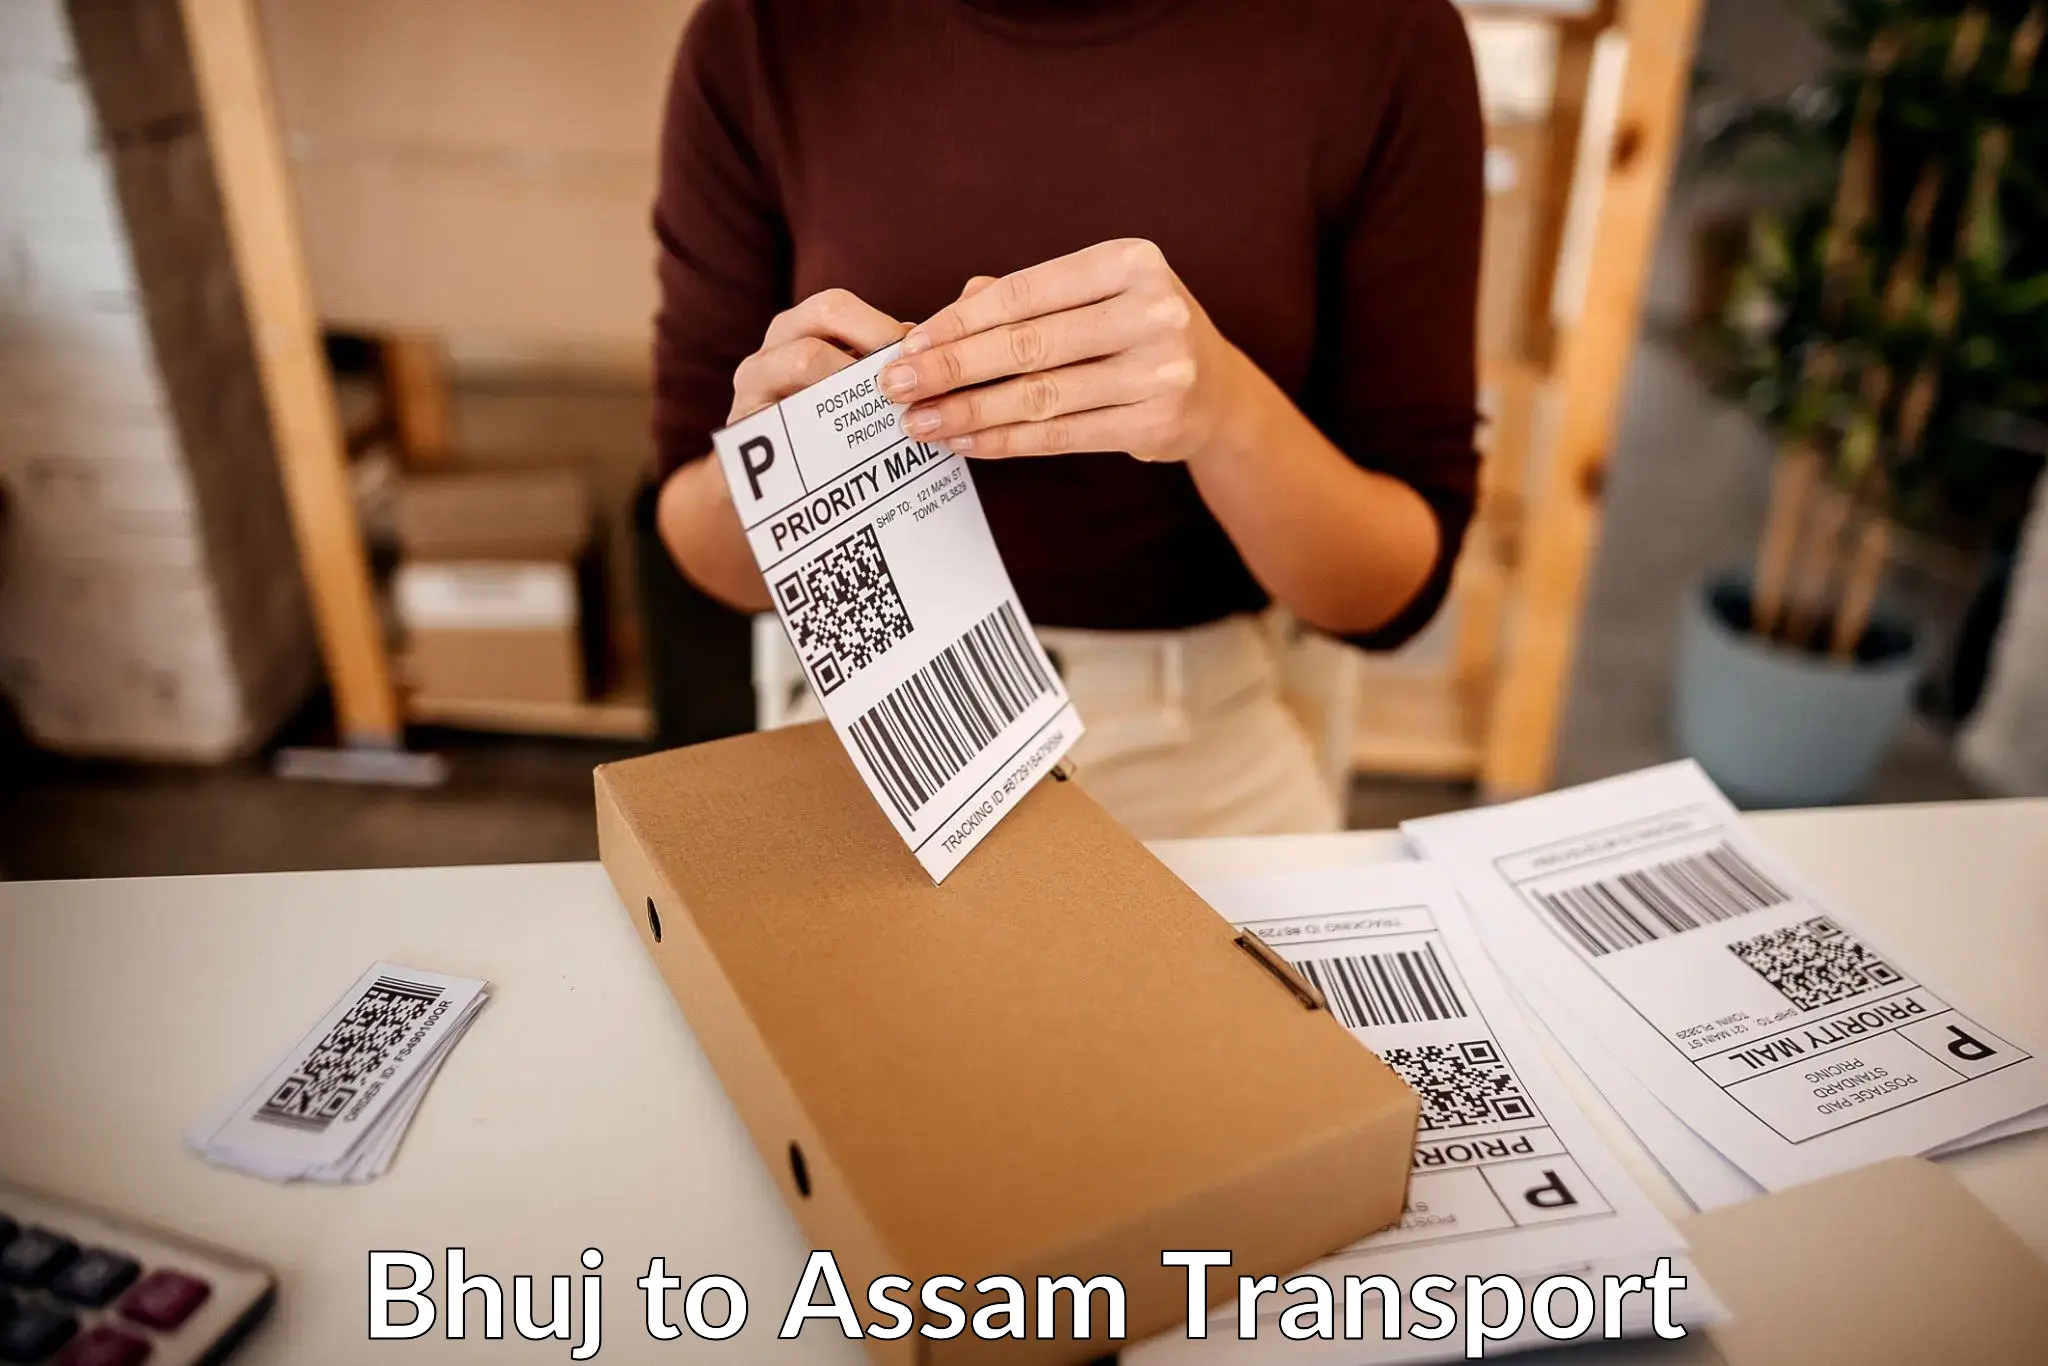 Transport in sharing Bhuj to Assam